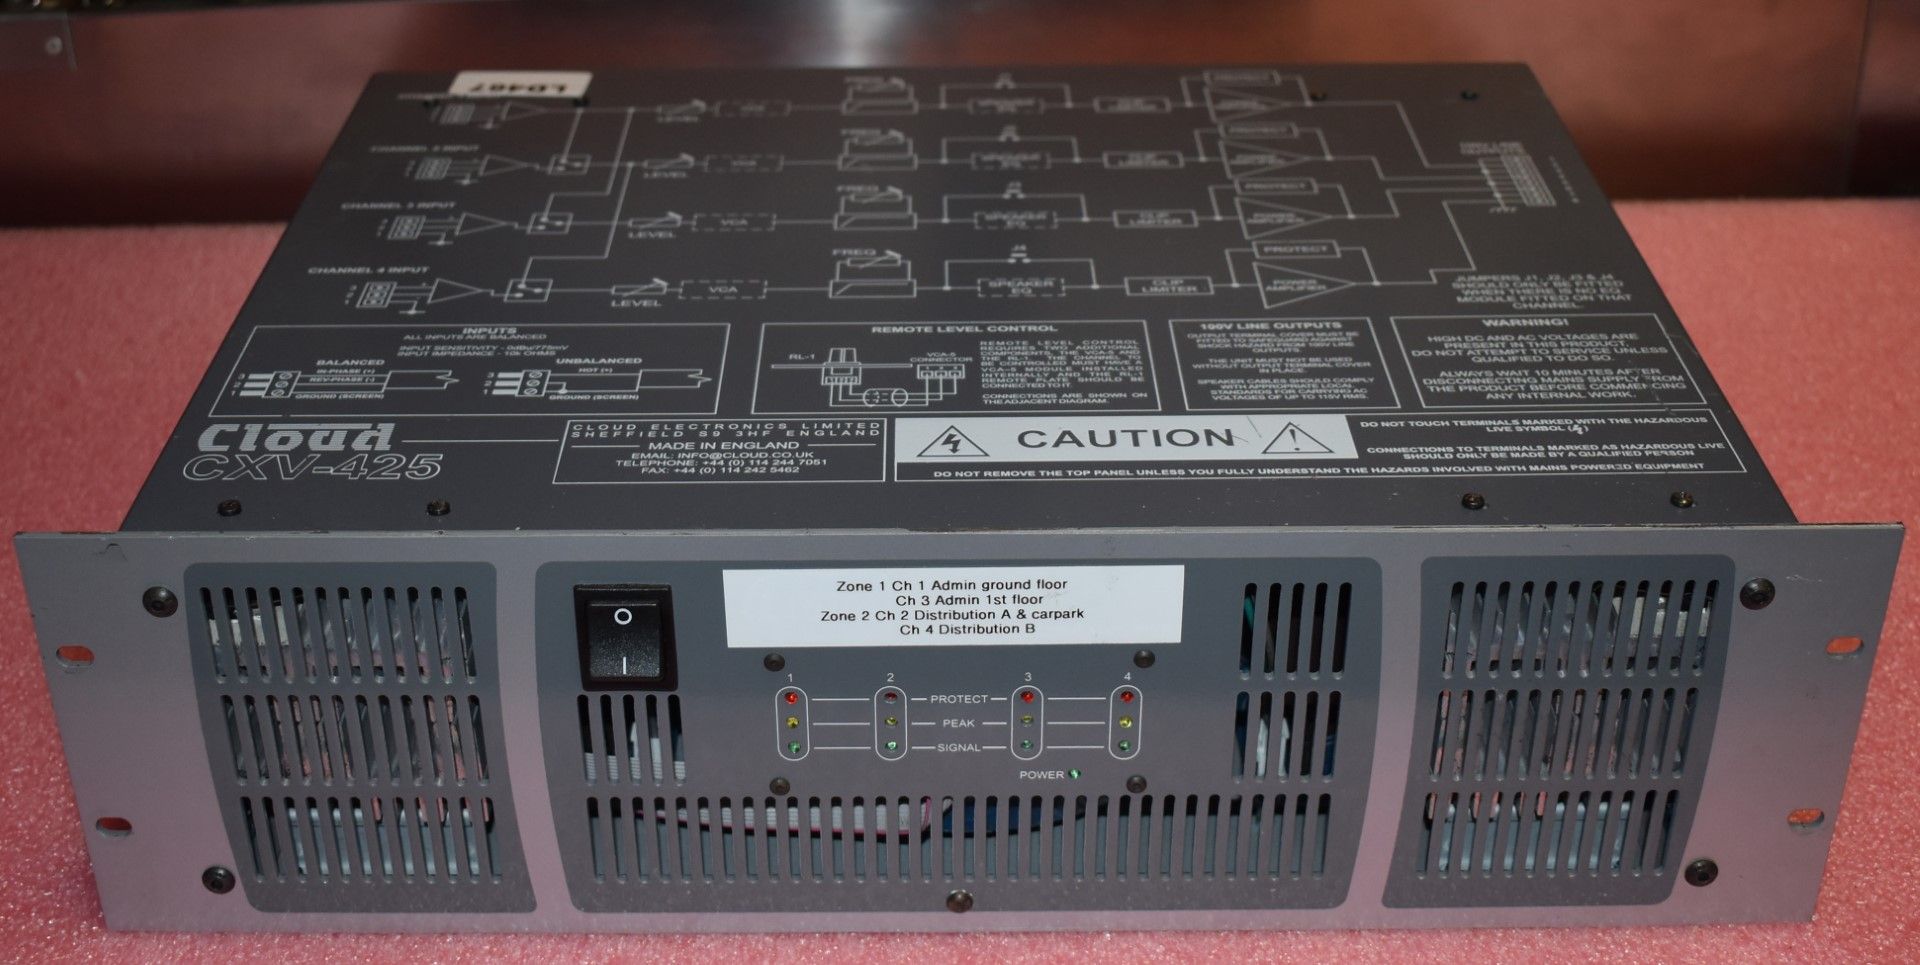 1 x Cloud CXV-425  Power Amplifier - 100v, 4x 250w, Transformer Less - Rackmount Unit 3U - CL409 - - Image 4 of 6